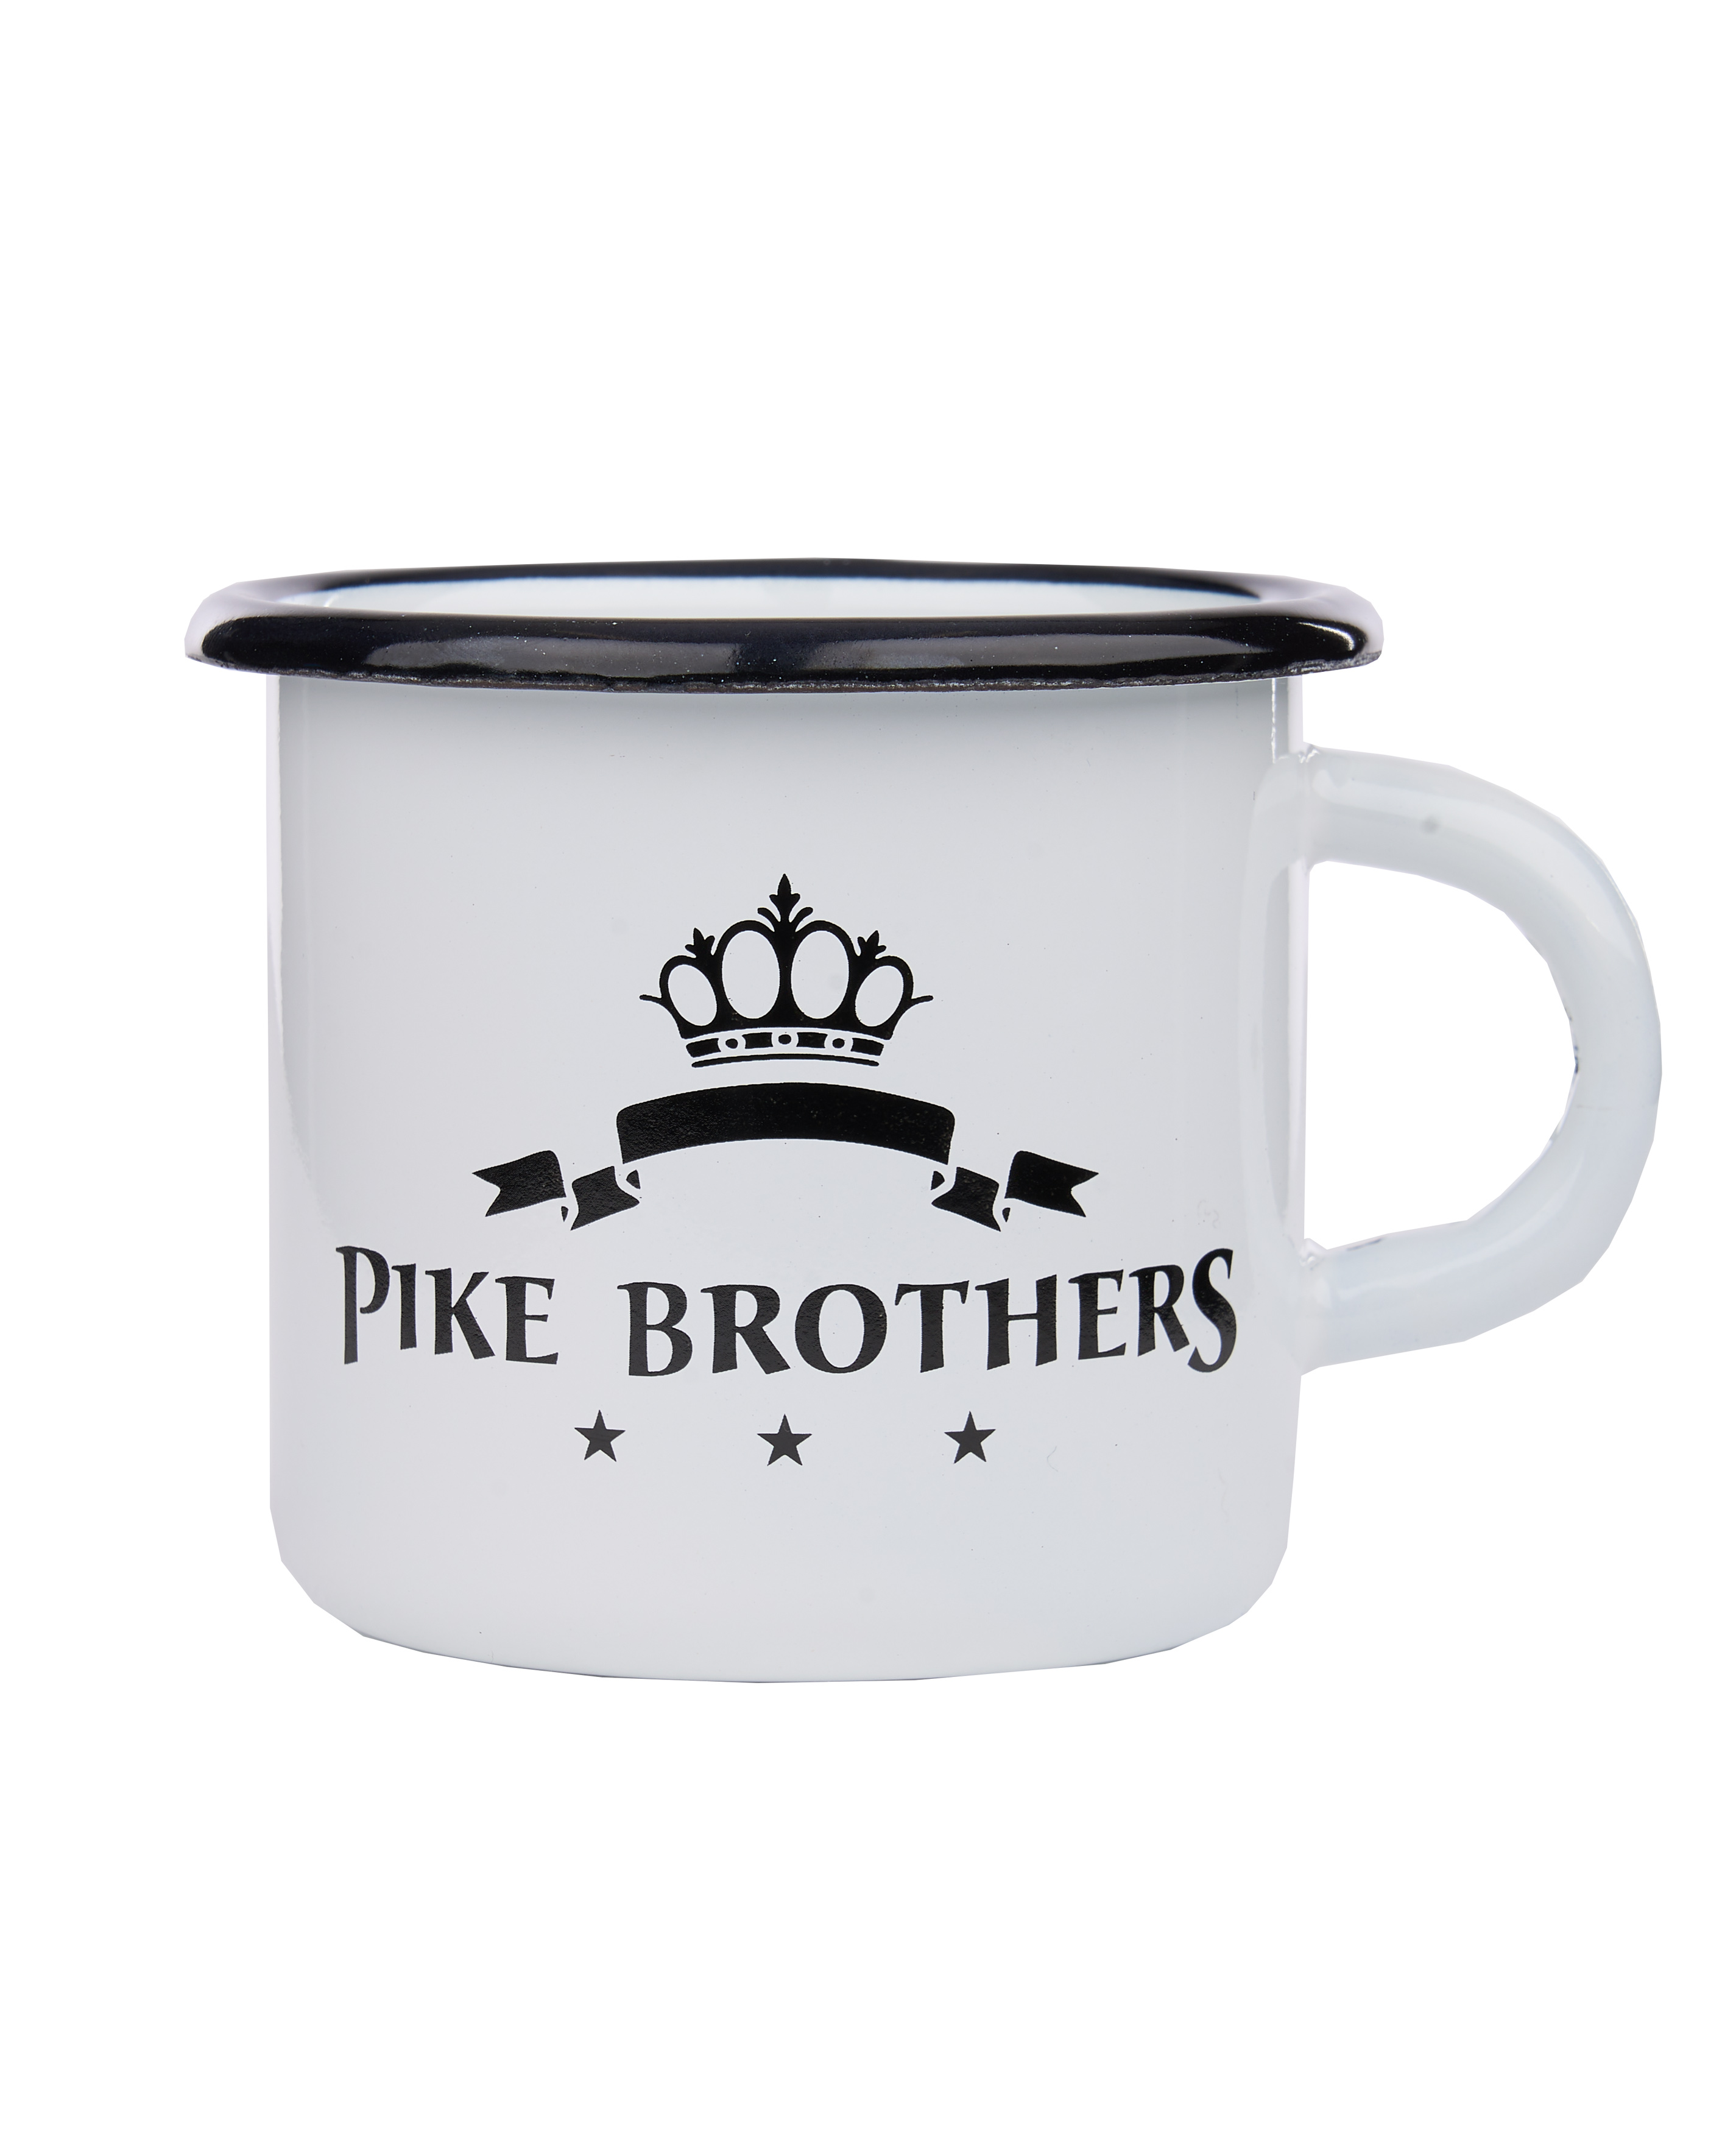 1951 Pike Brothers Enamel Mug white